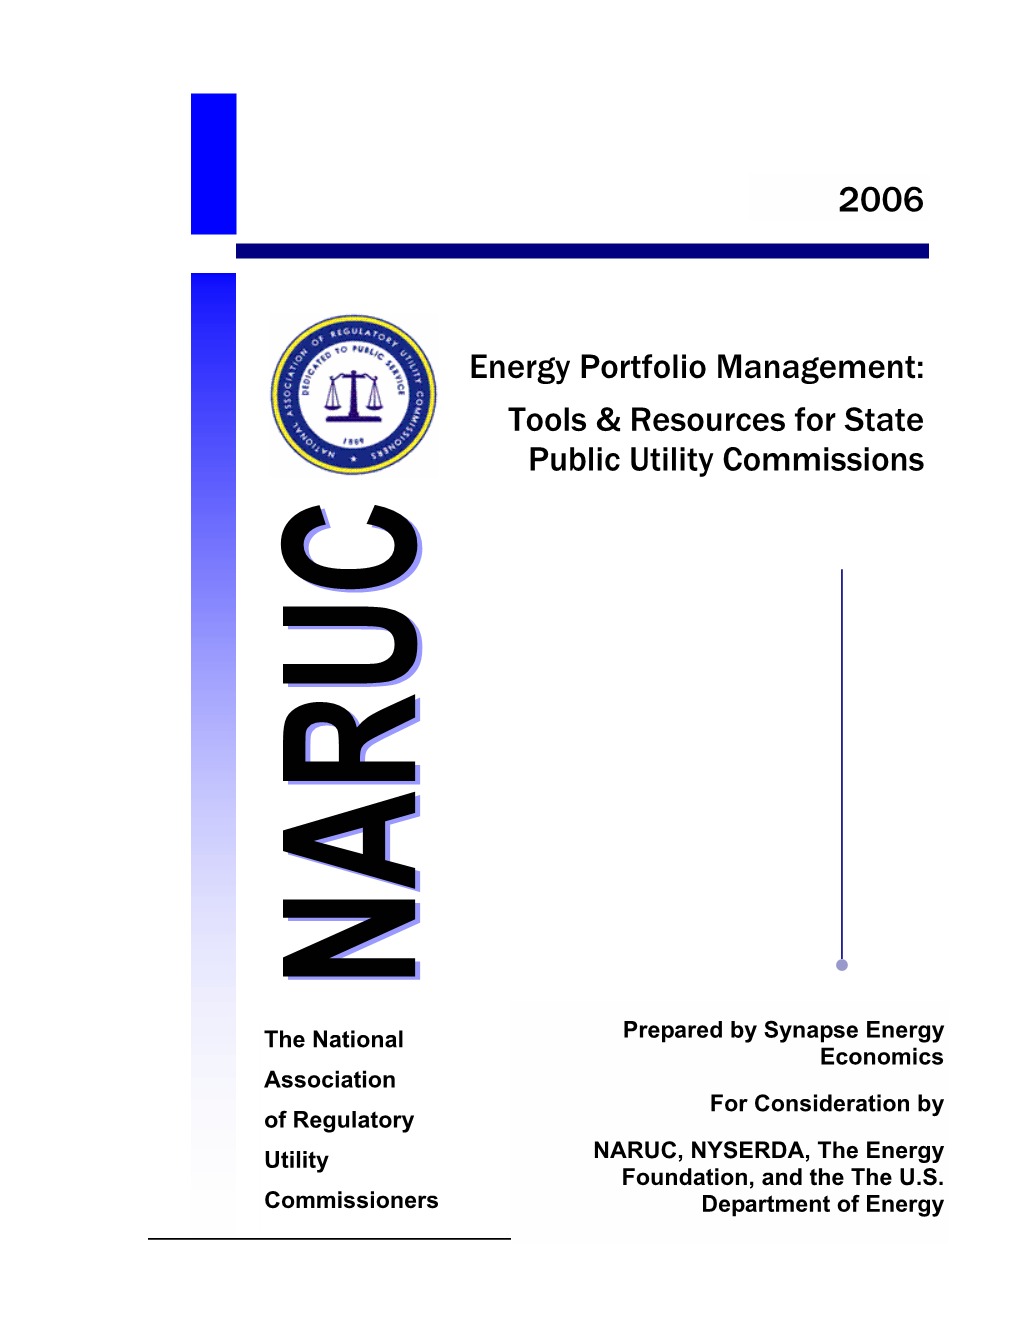 Energy Portfolio Management: Tools & Resources for State Public Utility